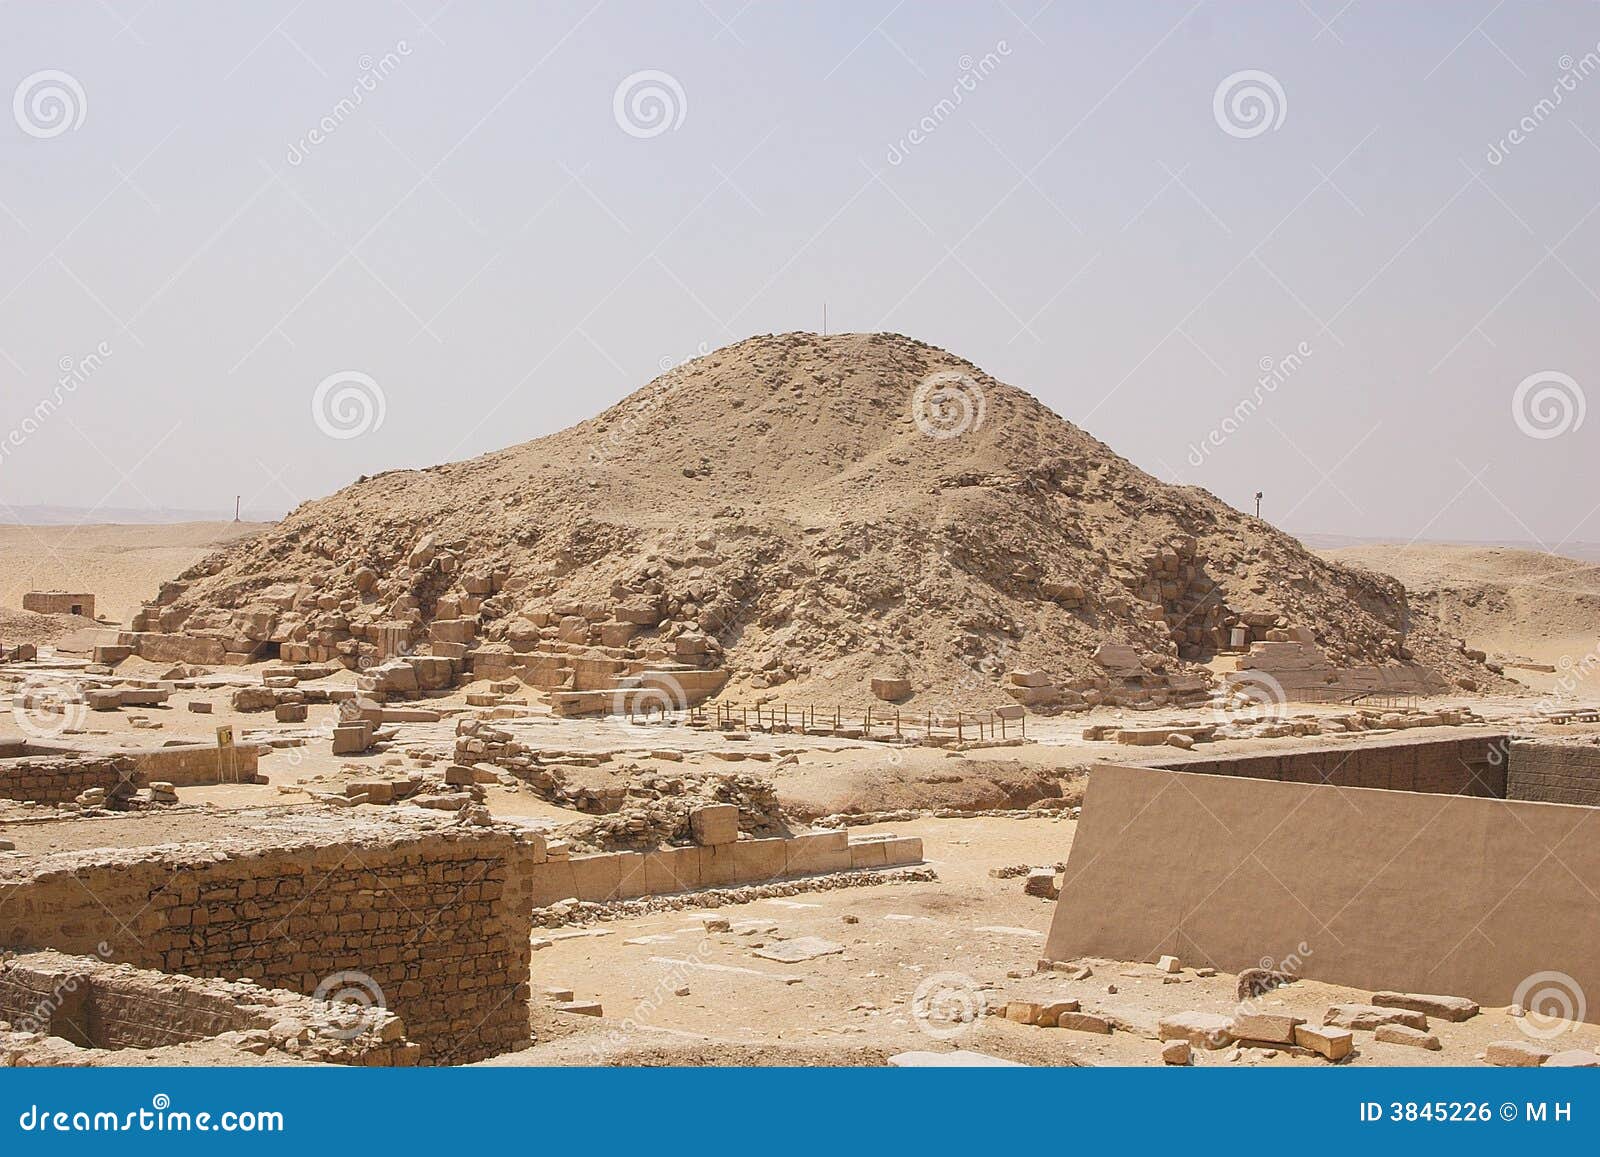 egypt - saqqara